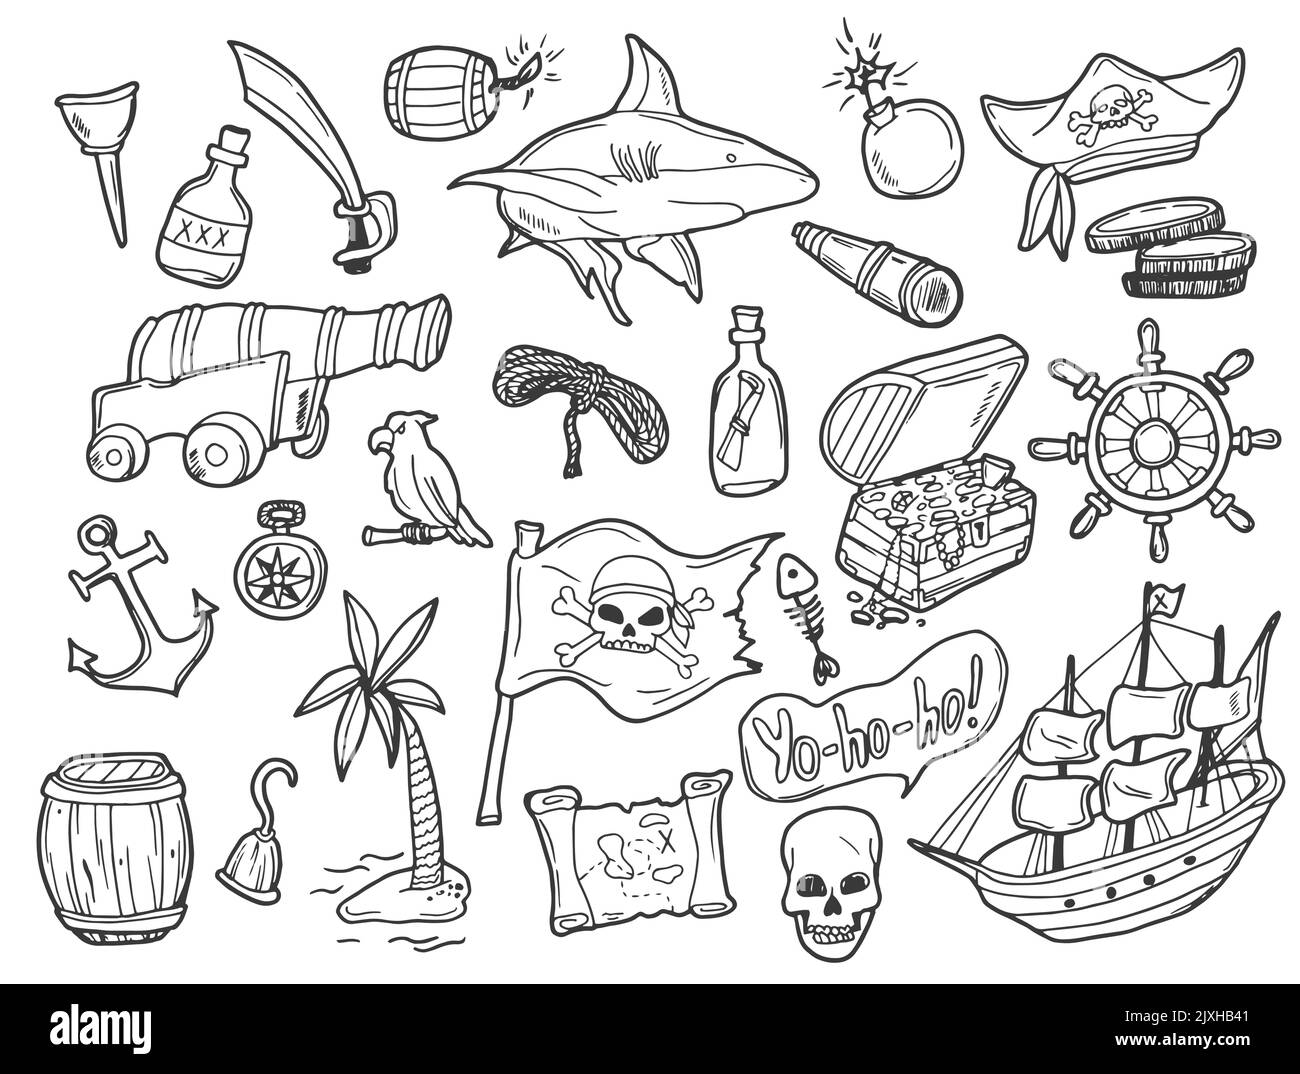 Pirates themed freehand drawings set. Symbols of piracy - hat, swords, guns, treasure chest, ship, black flag, jolly roger emblem, skull and crossbone Stock Vector